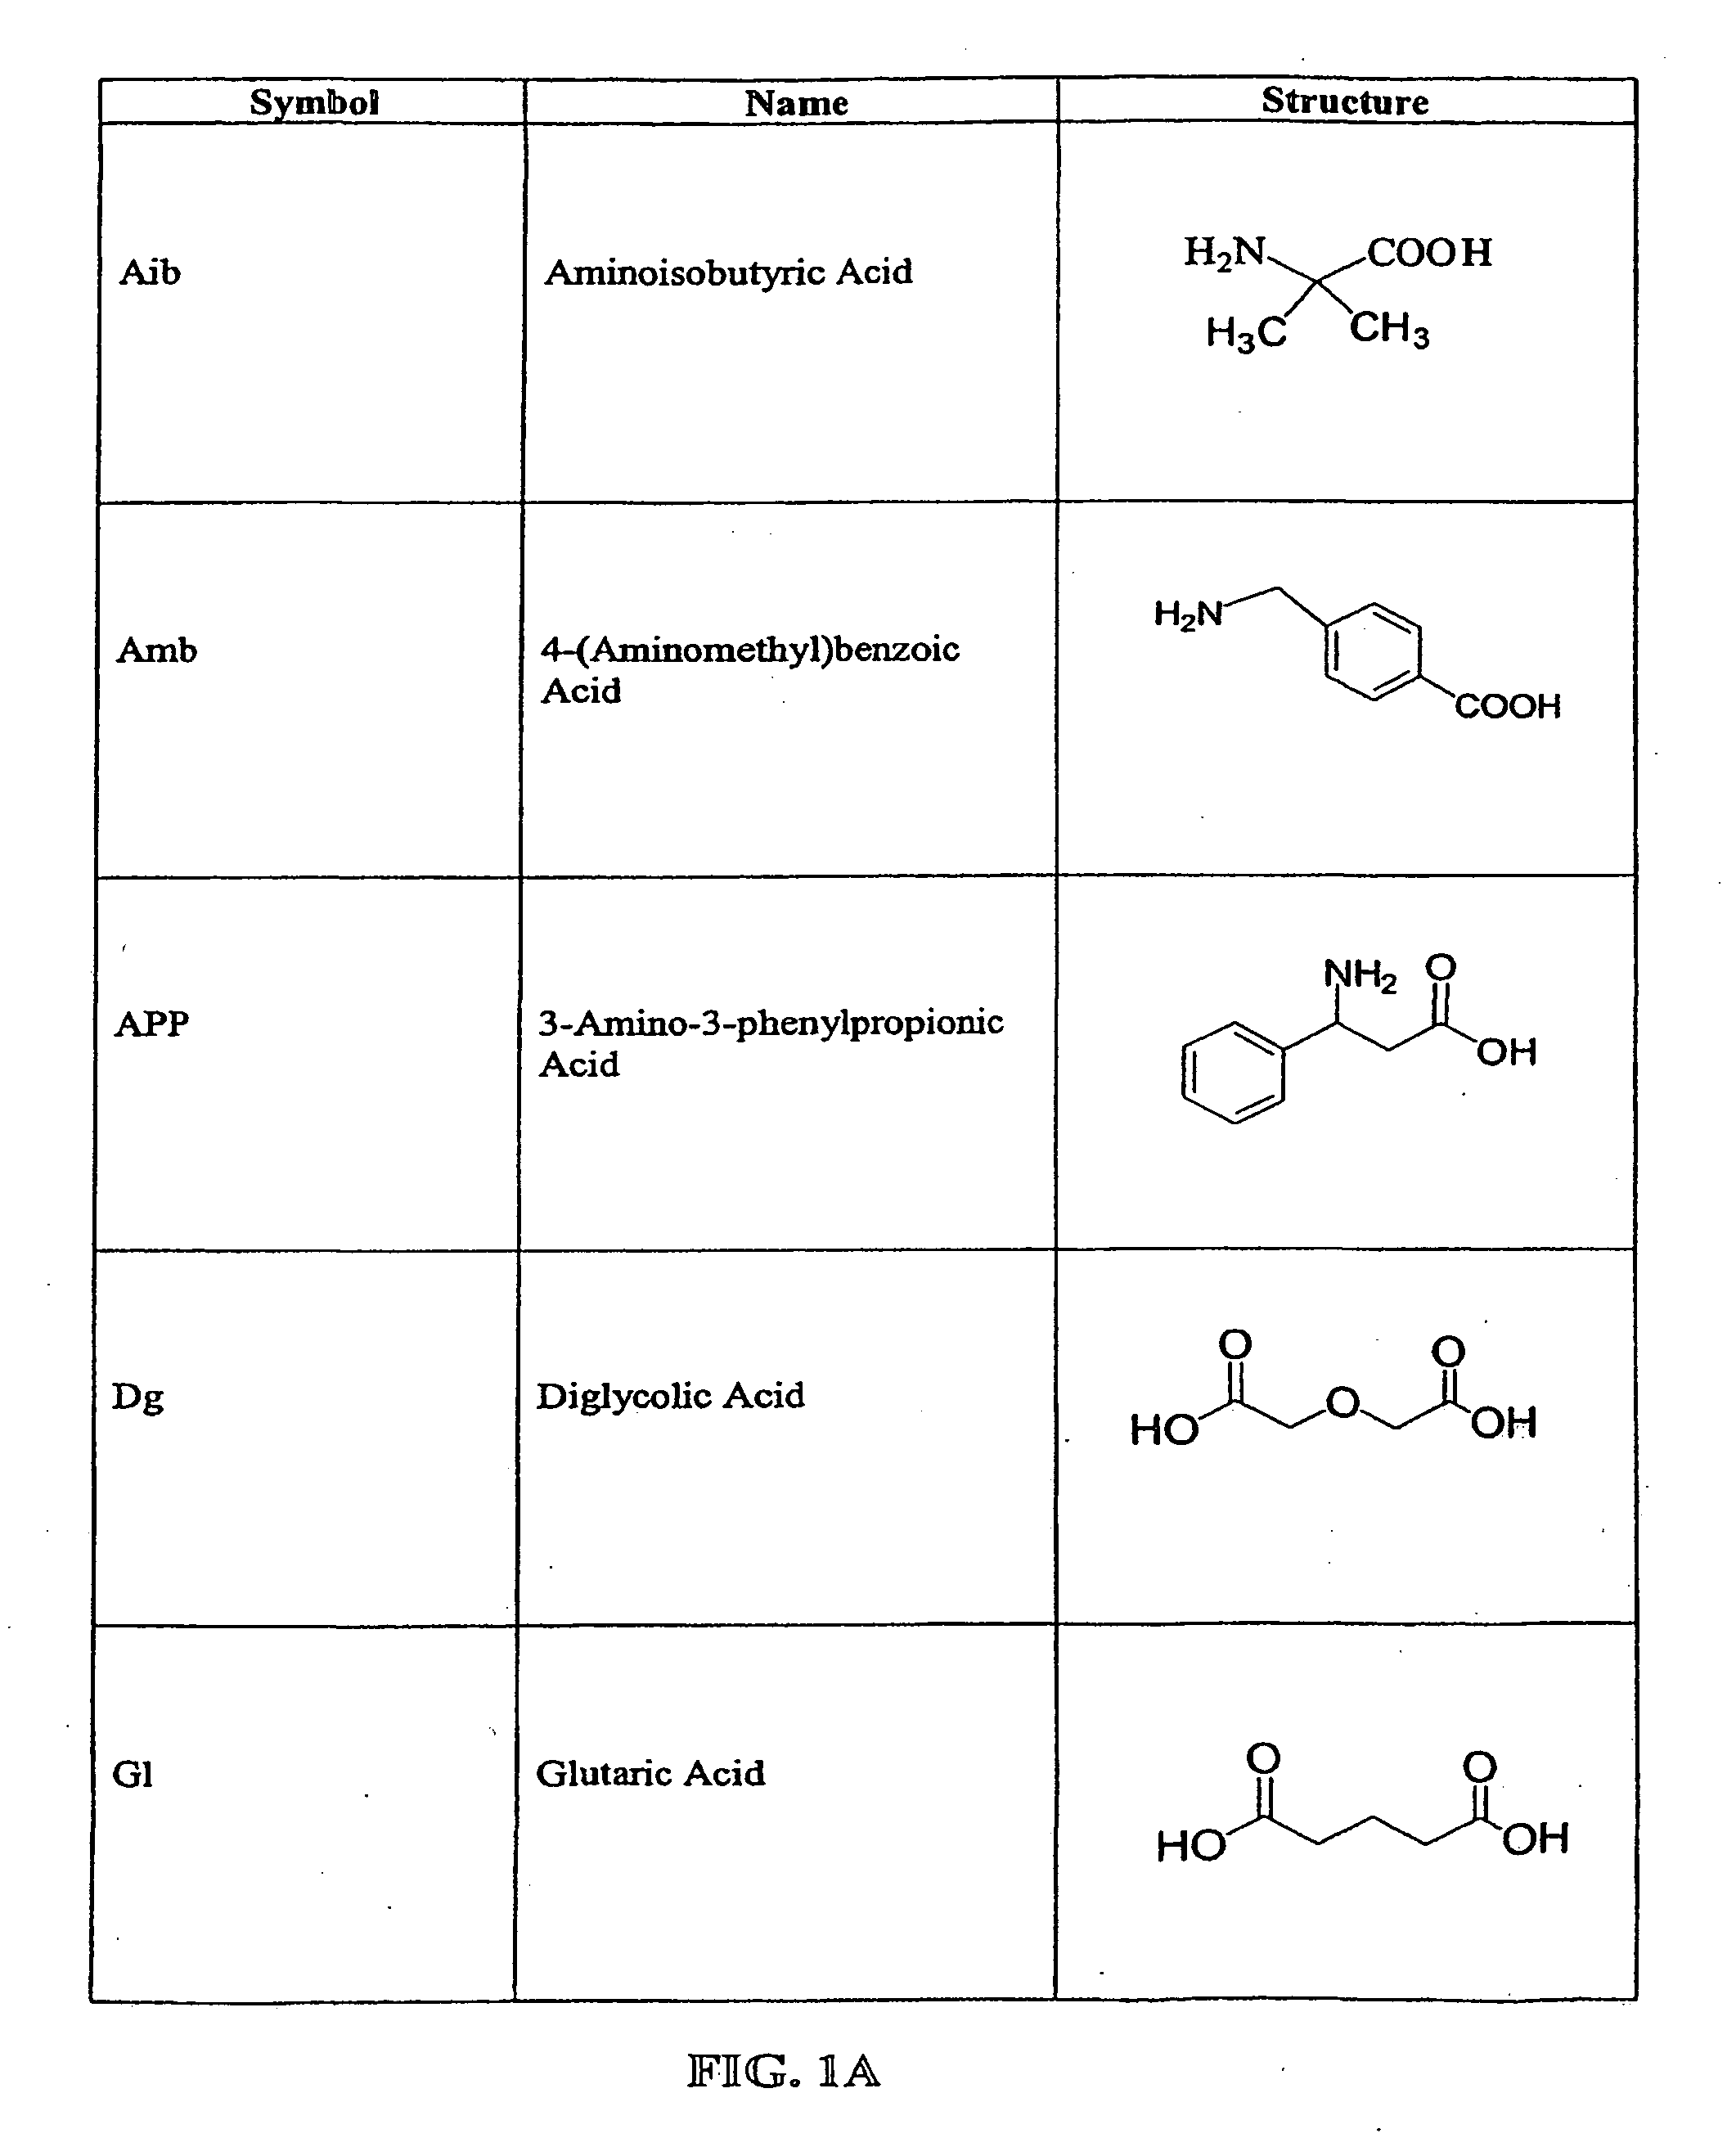 Prodrug compounds with isoleucine